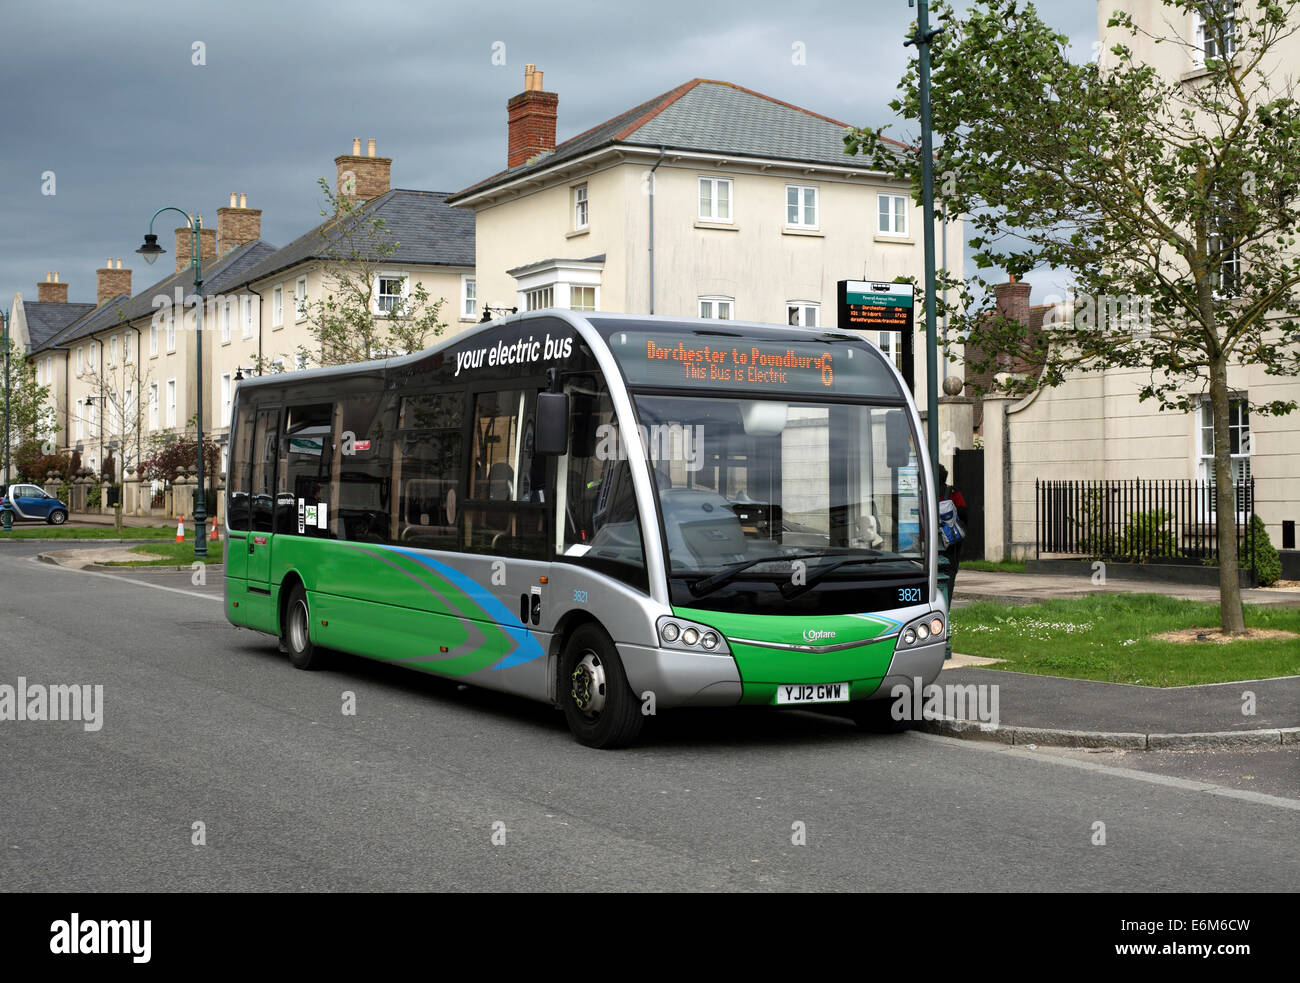 Electric bus in the Poundbury estate, Dorchester, Dorset. Stock Photo